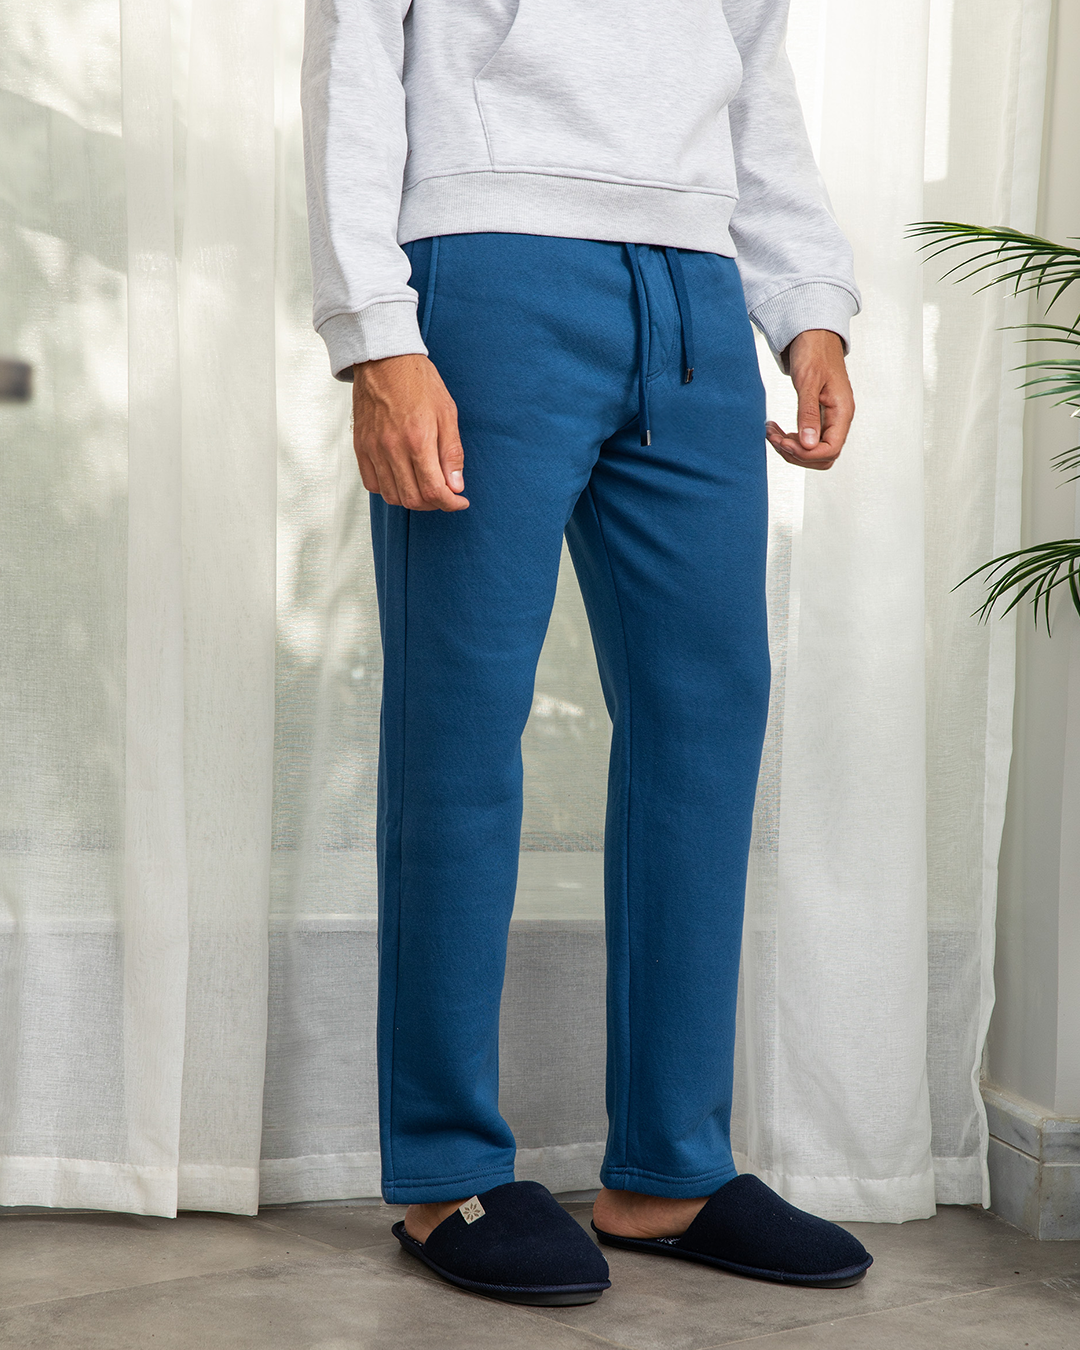 Plain men's trousers